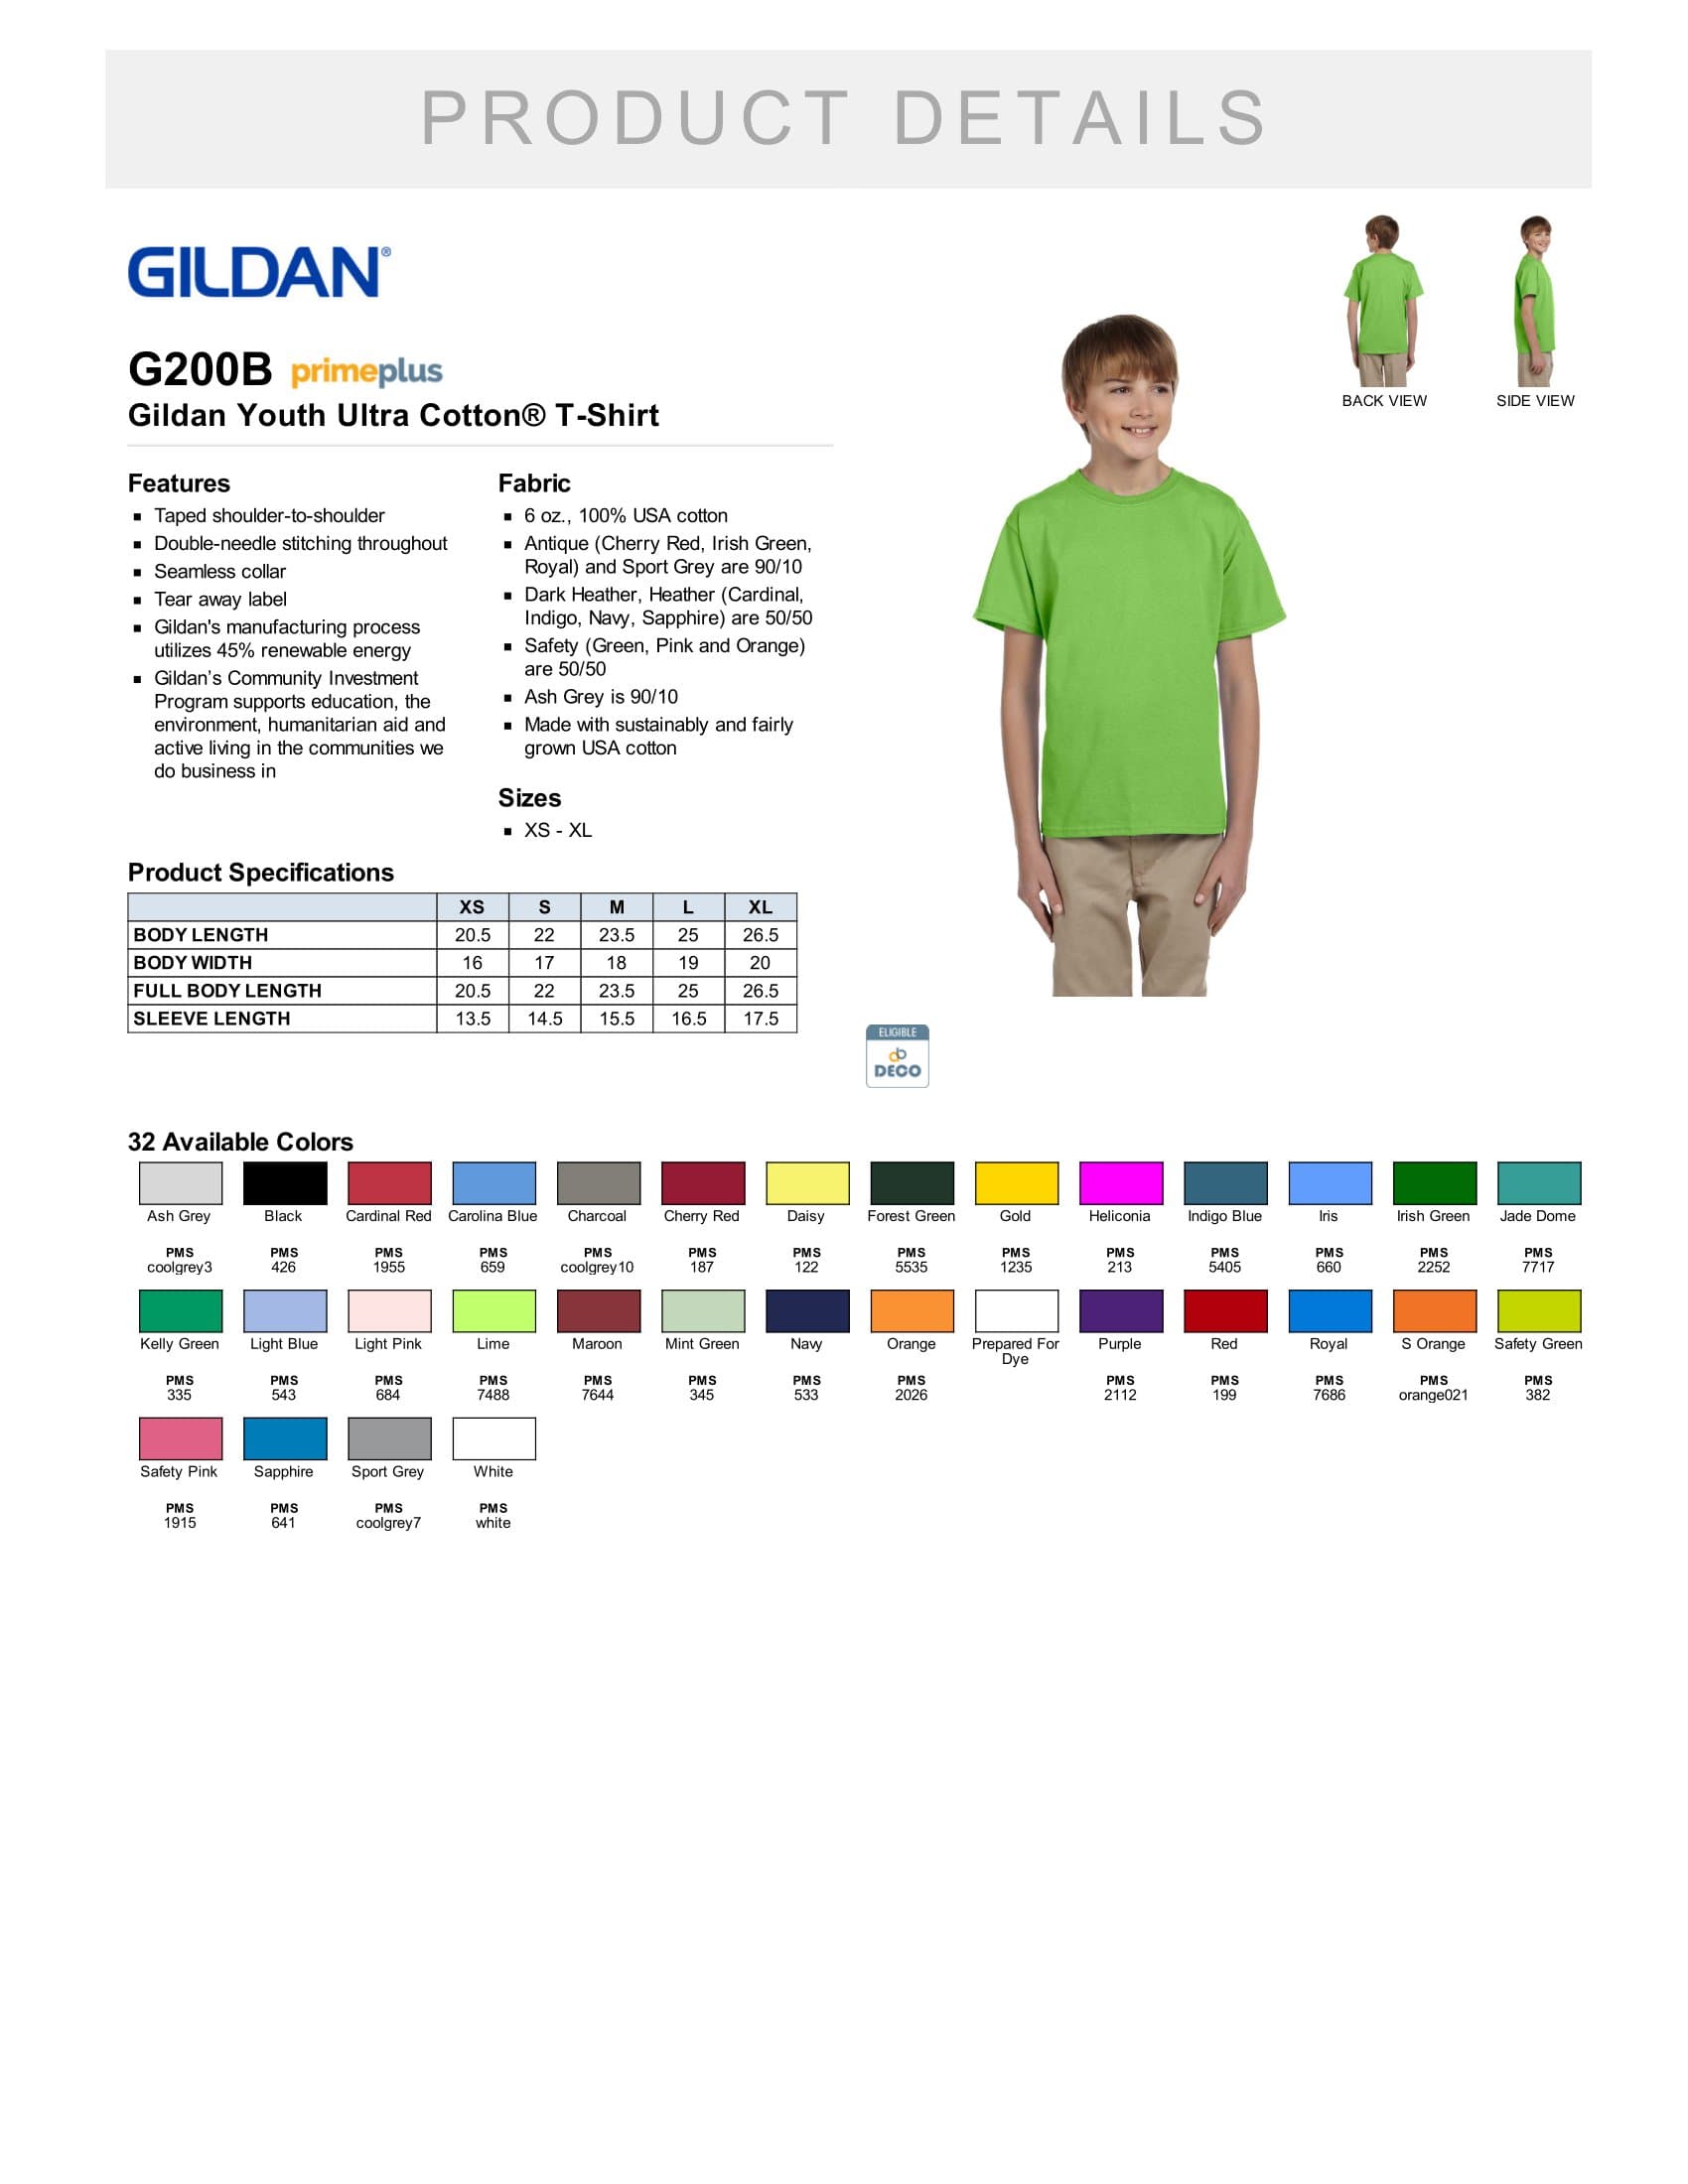 Gildan G200B 